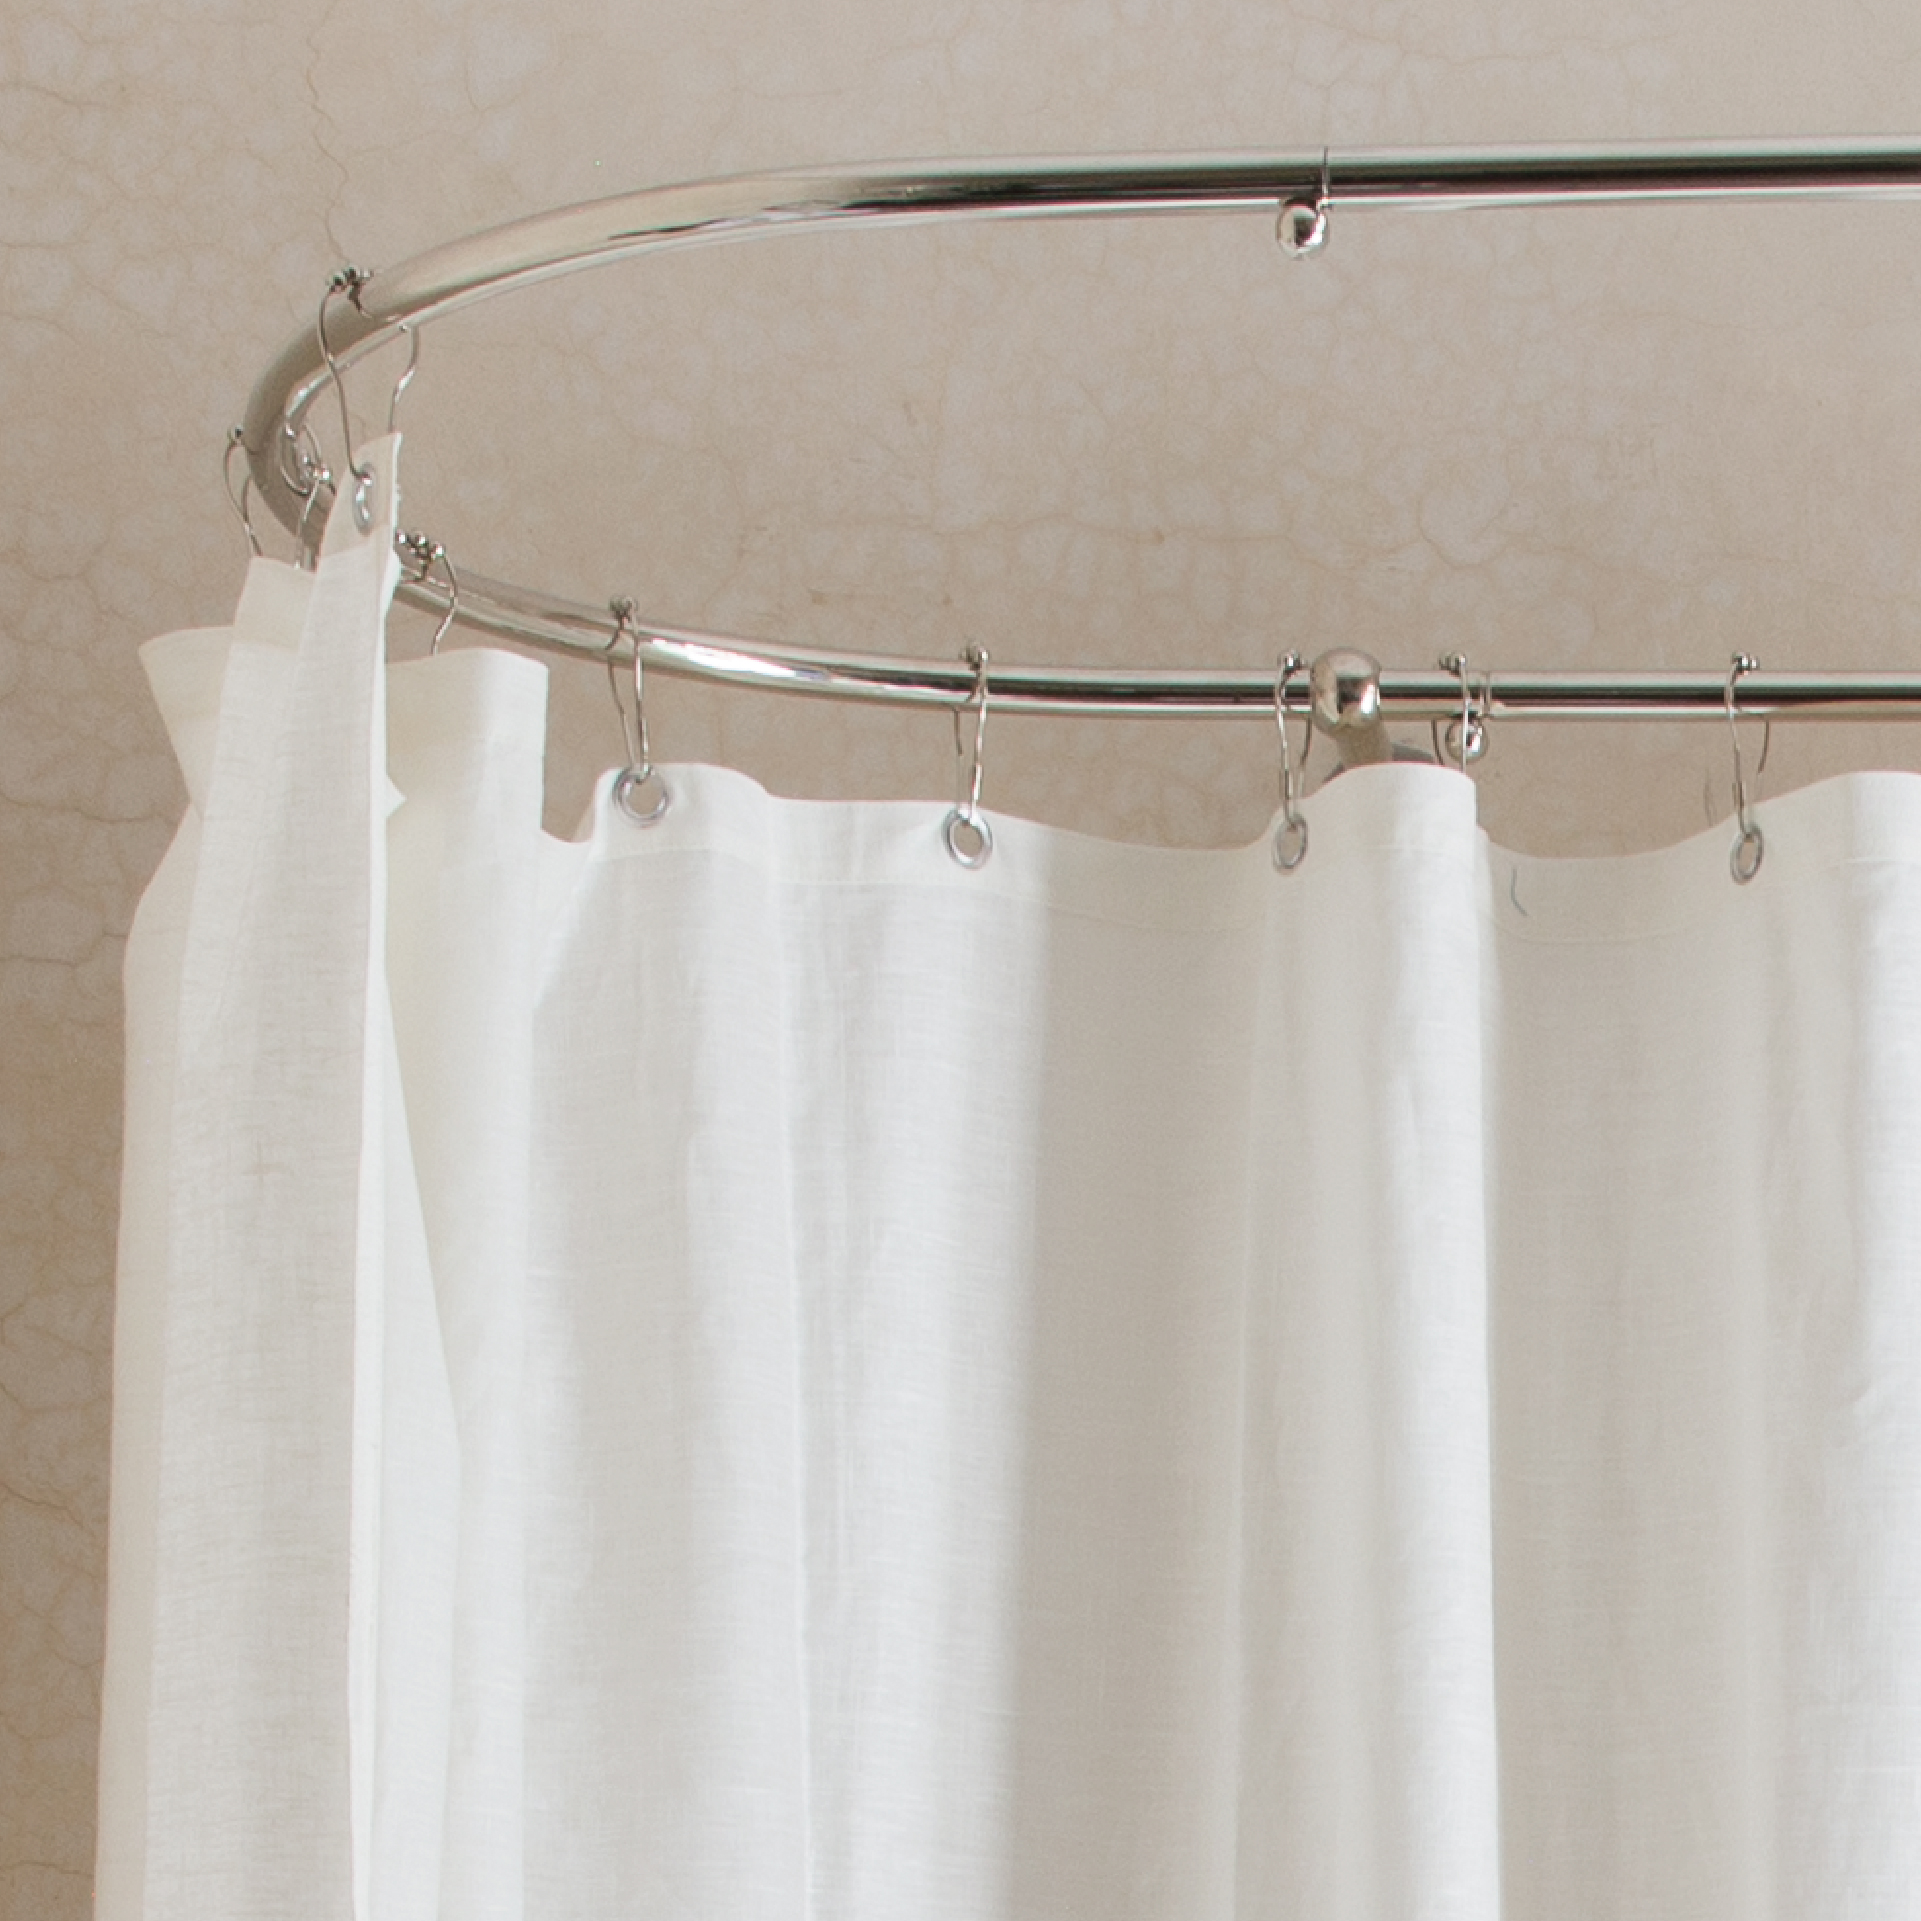 MS00-8PR17 Shower curtain ring